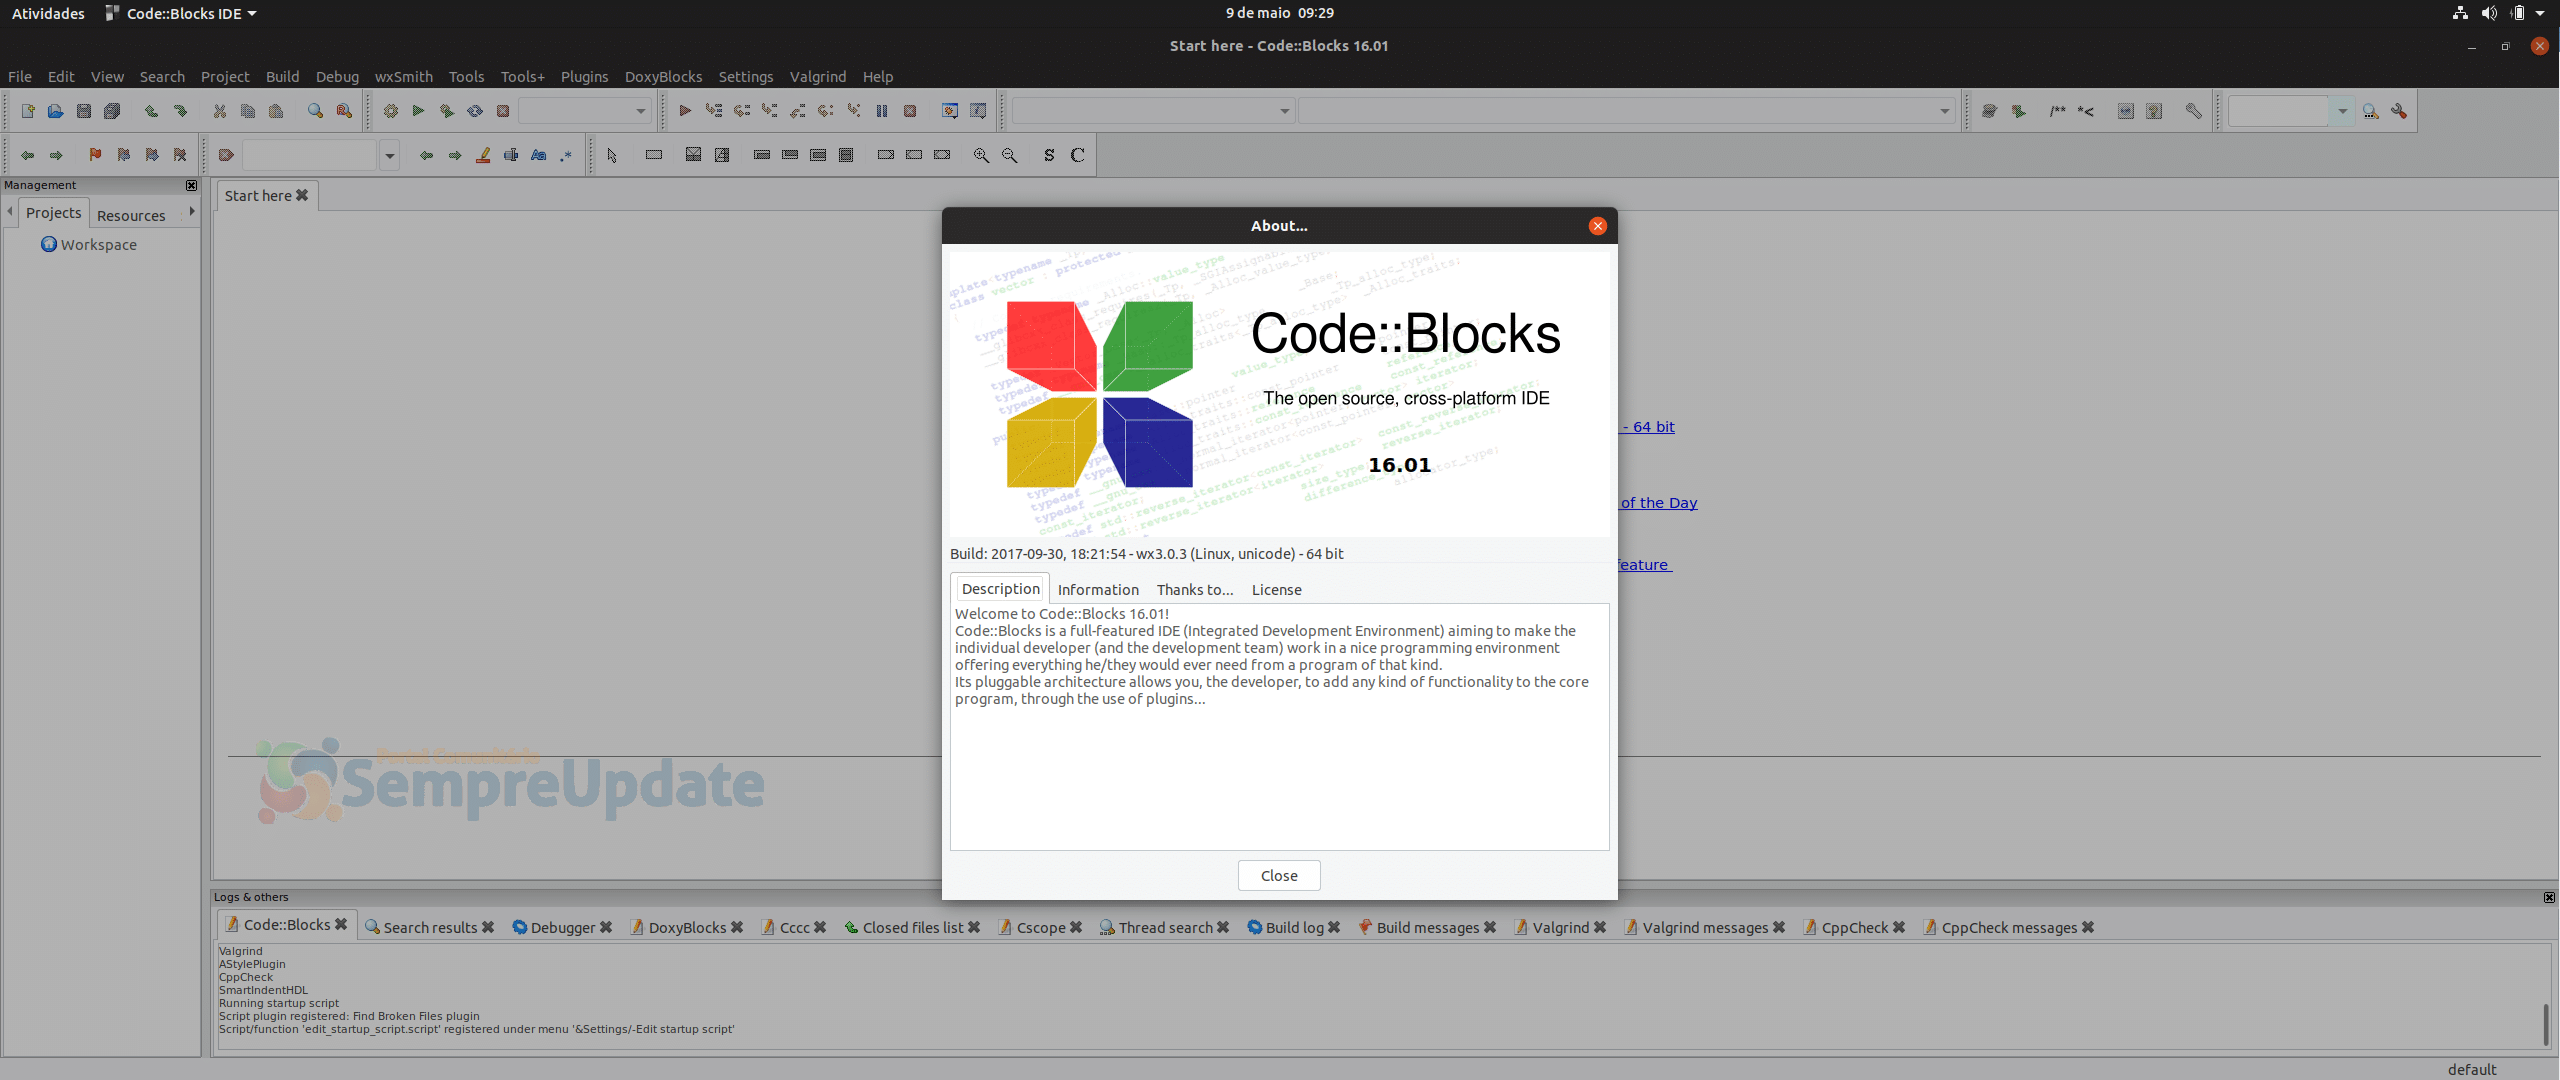 Como Instalar O Codeblocks No Ubuntu Ou Debian Sempreupdate